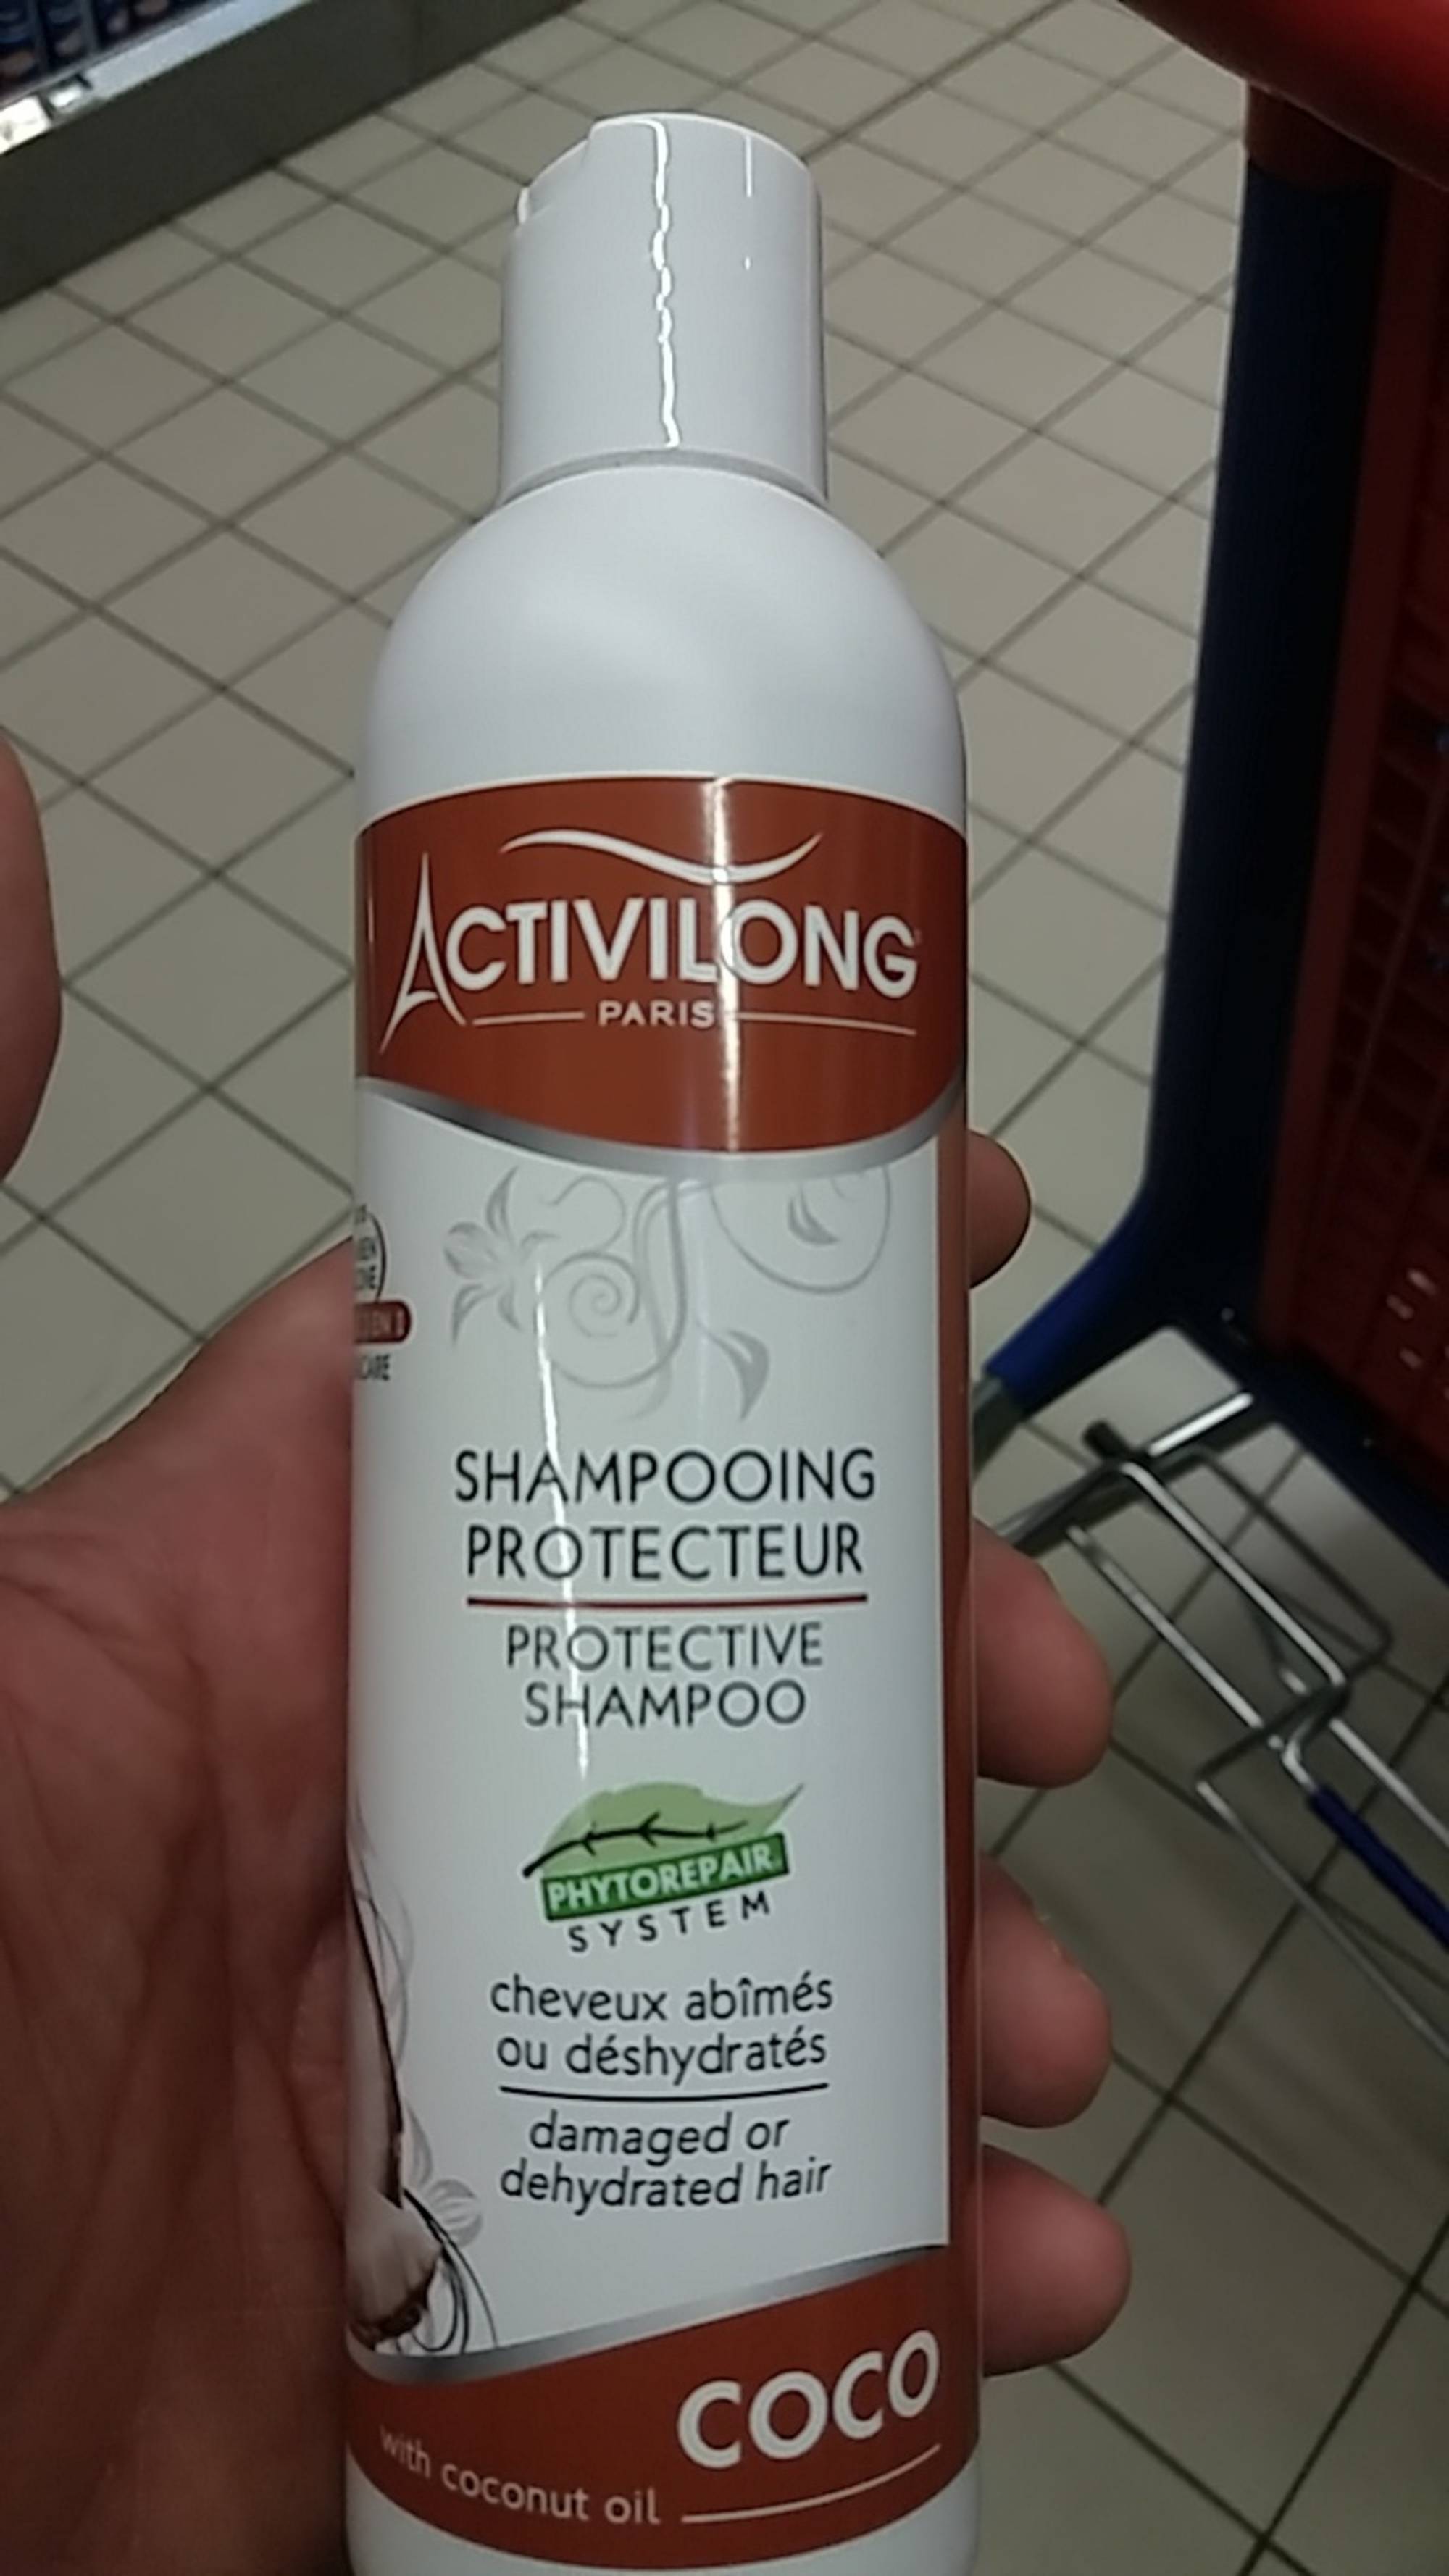 ACTIVILONG - Phytorepair system shampooing protecteur